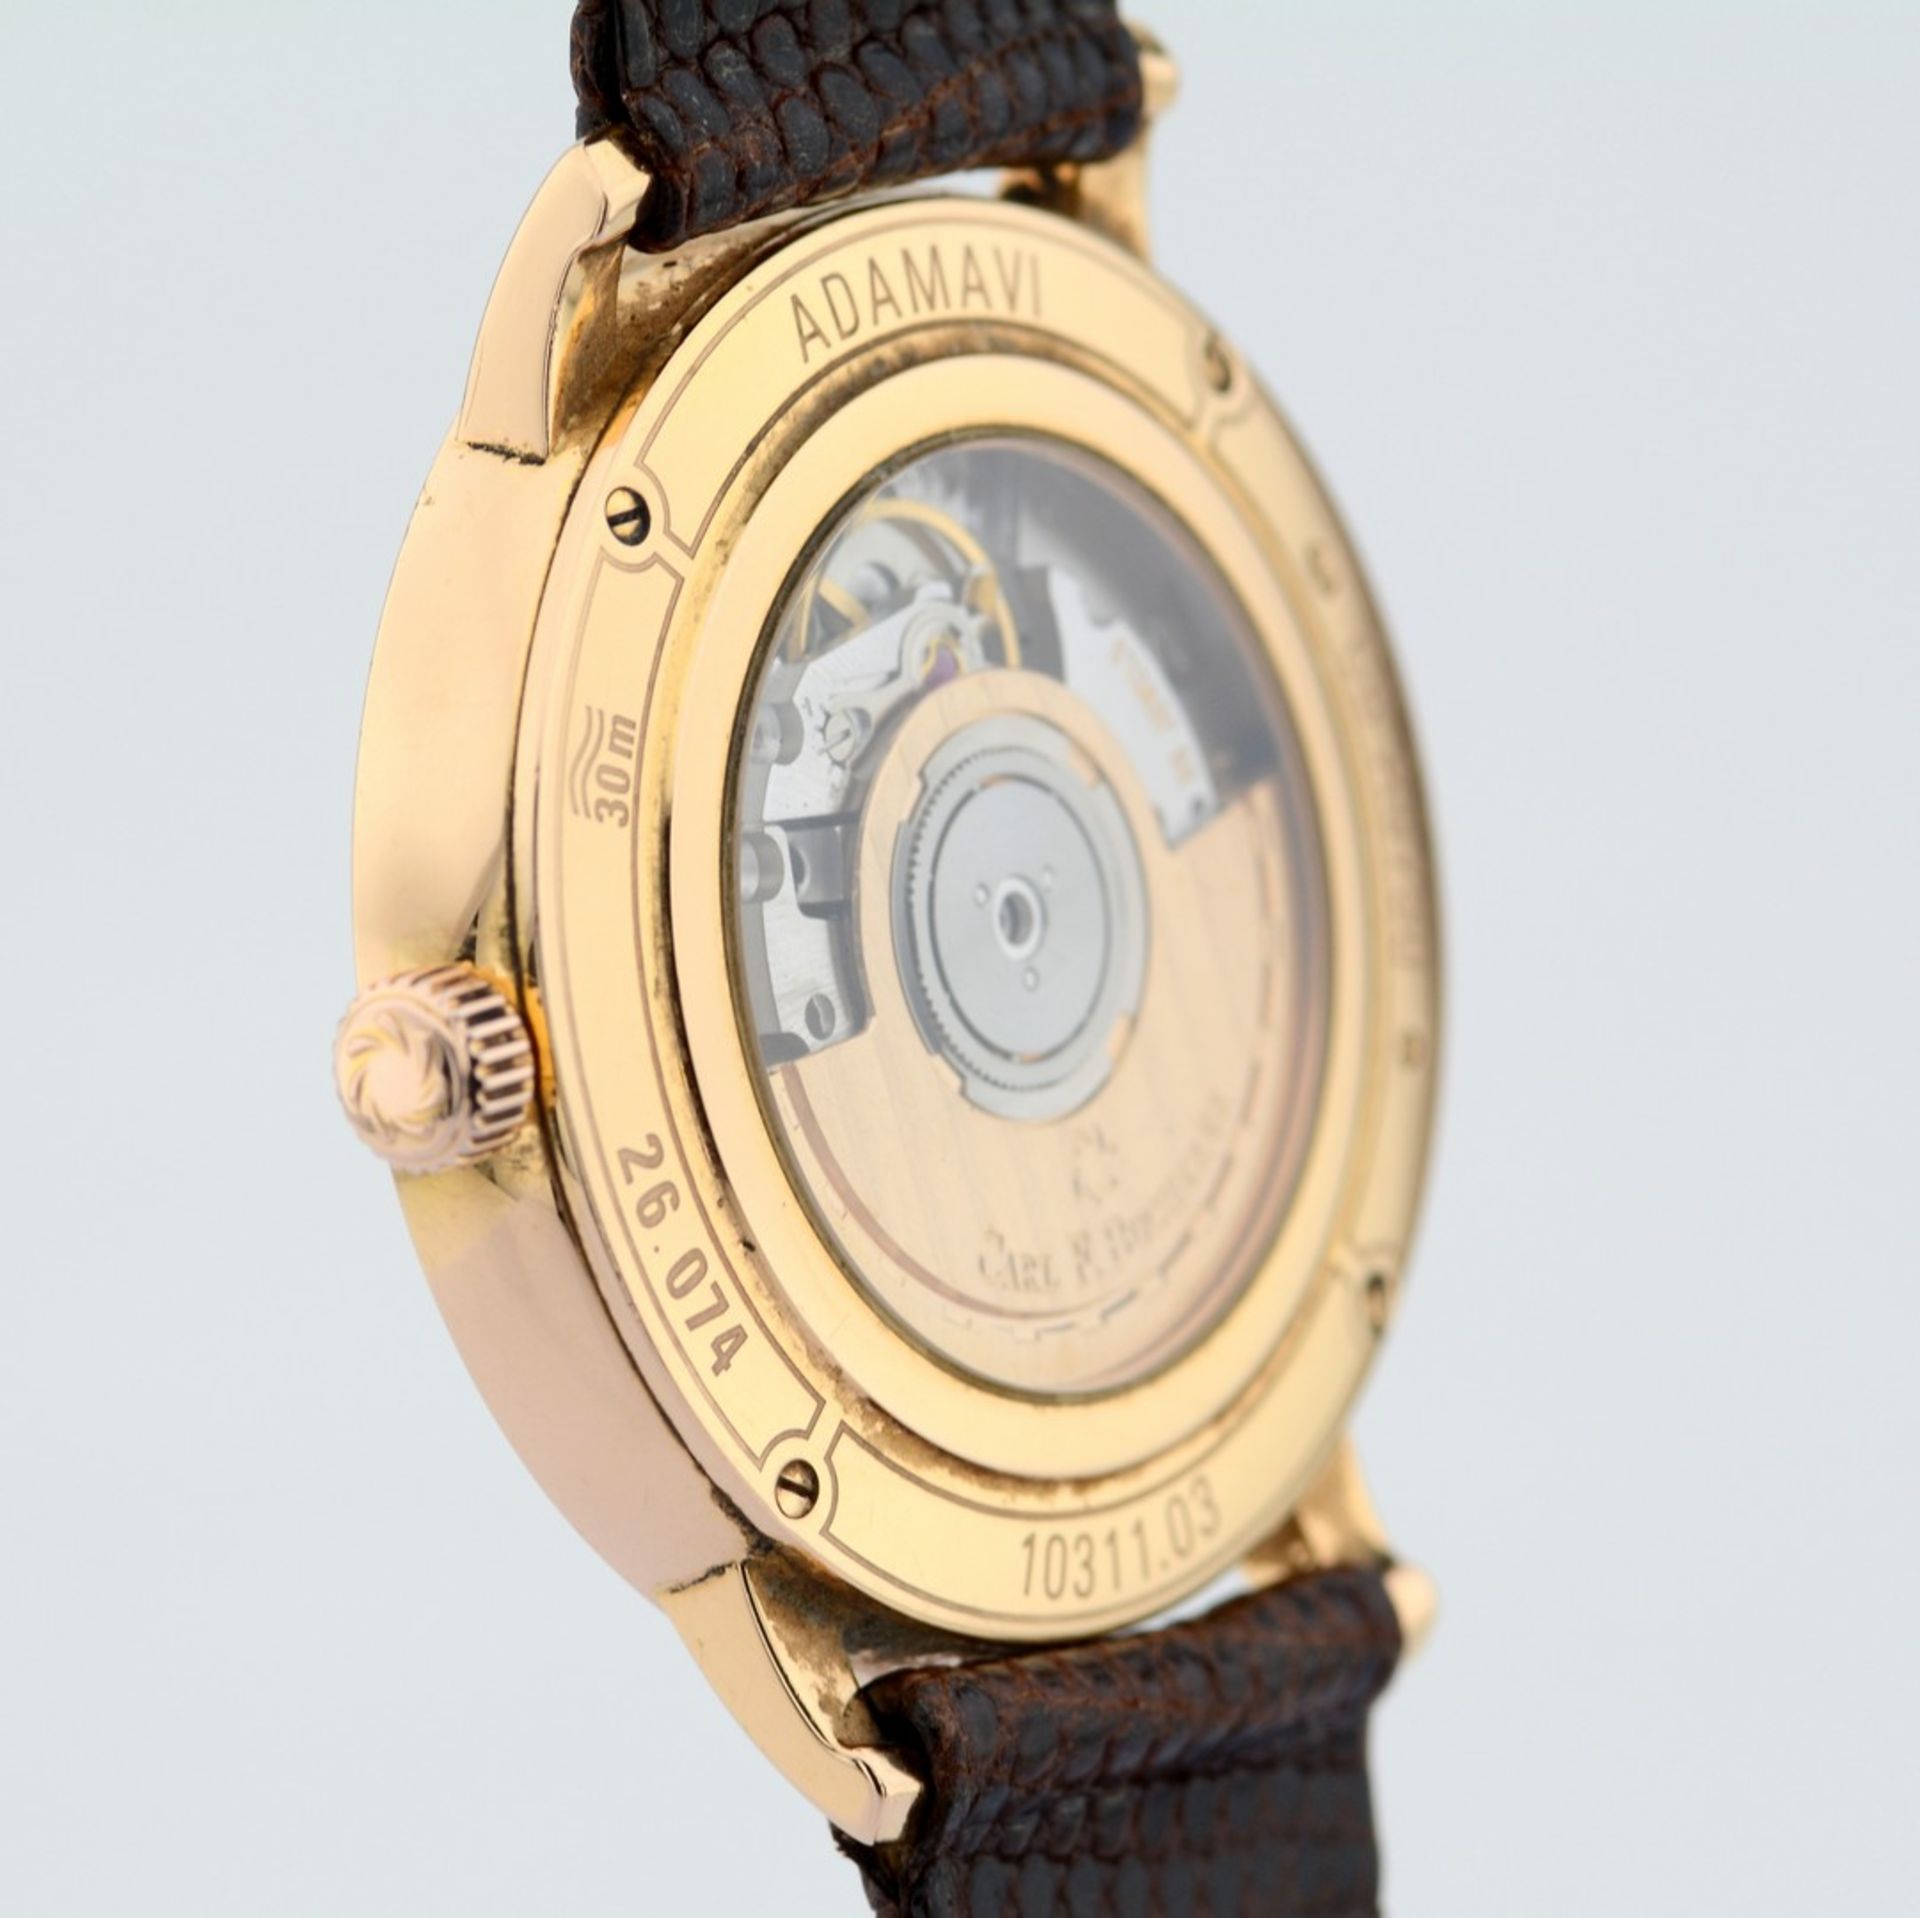 Carl F. Bucherer / Adamavi - 18K Yellow Gold Case - Automatic - Date - Gentlemen's Pink Gold Wrist.. - Image 6 of 7